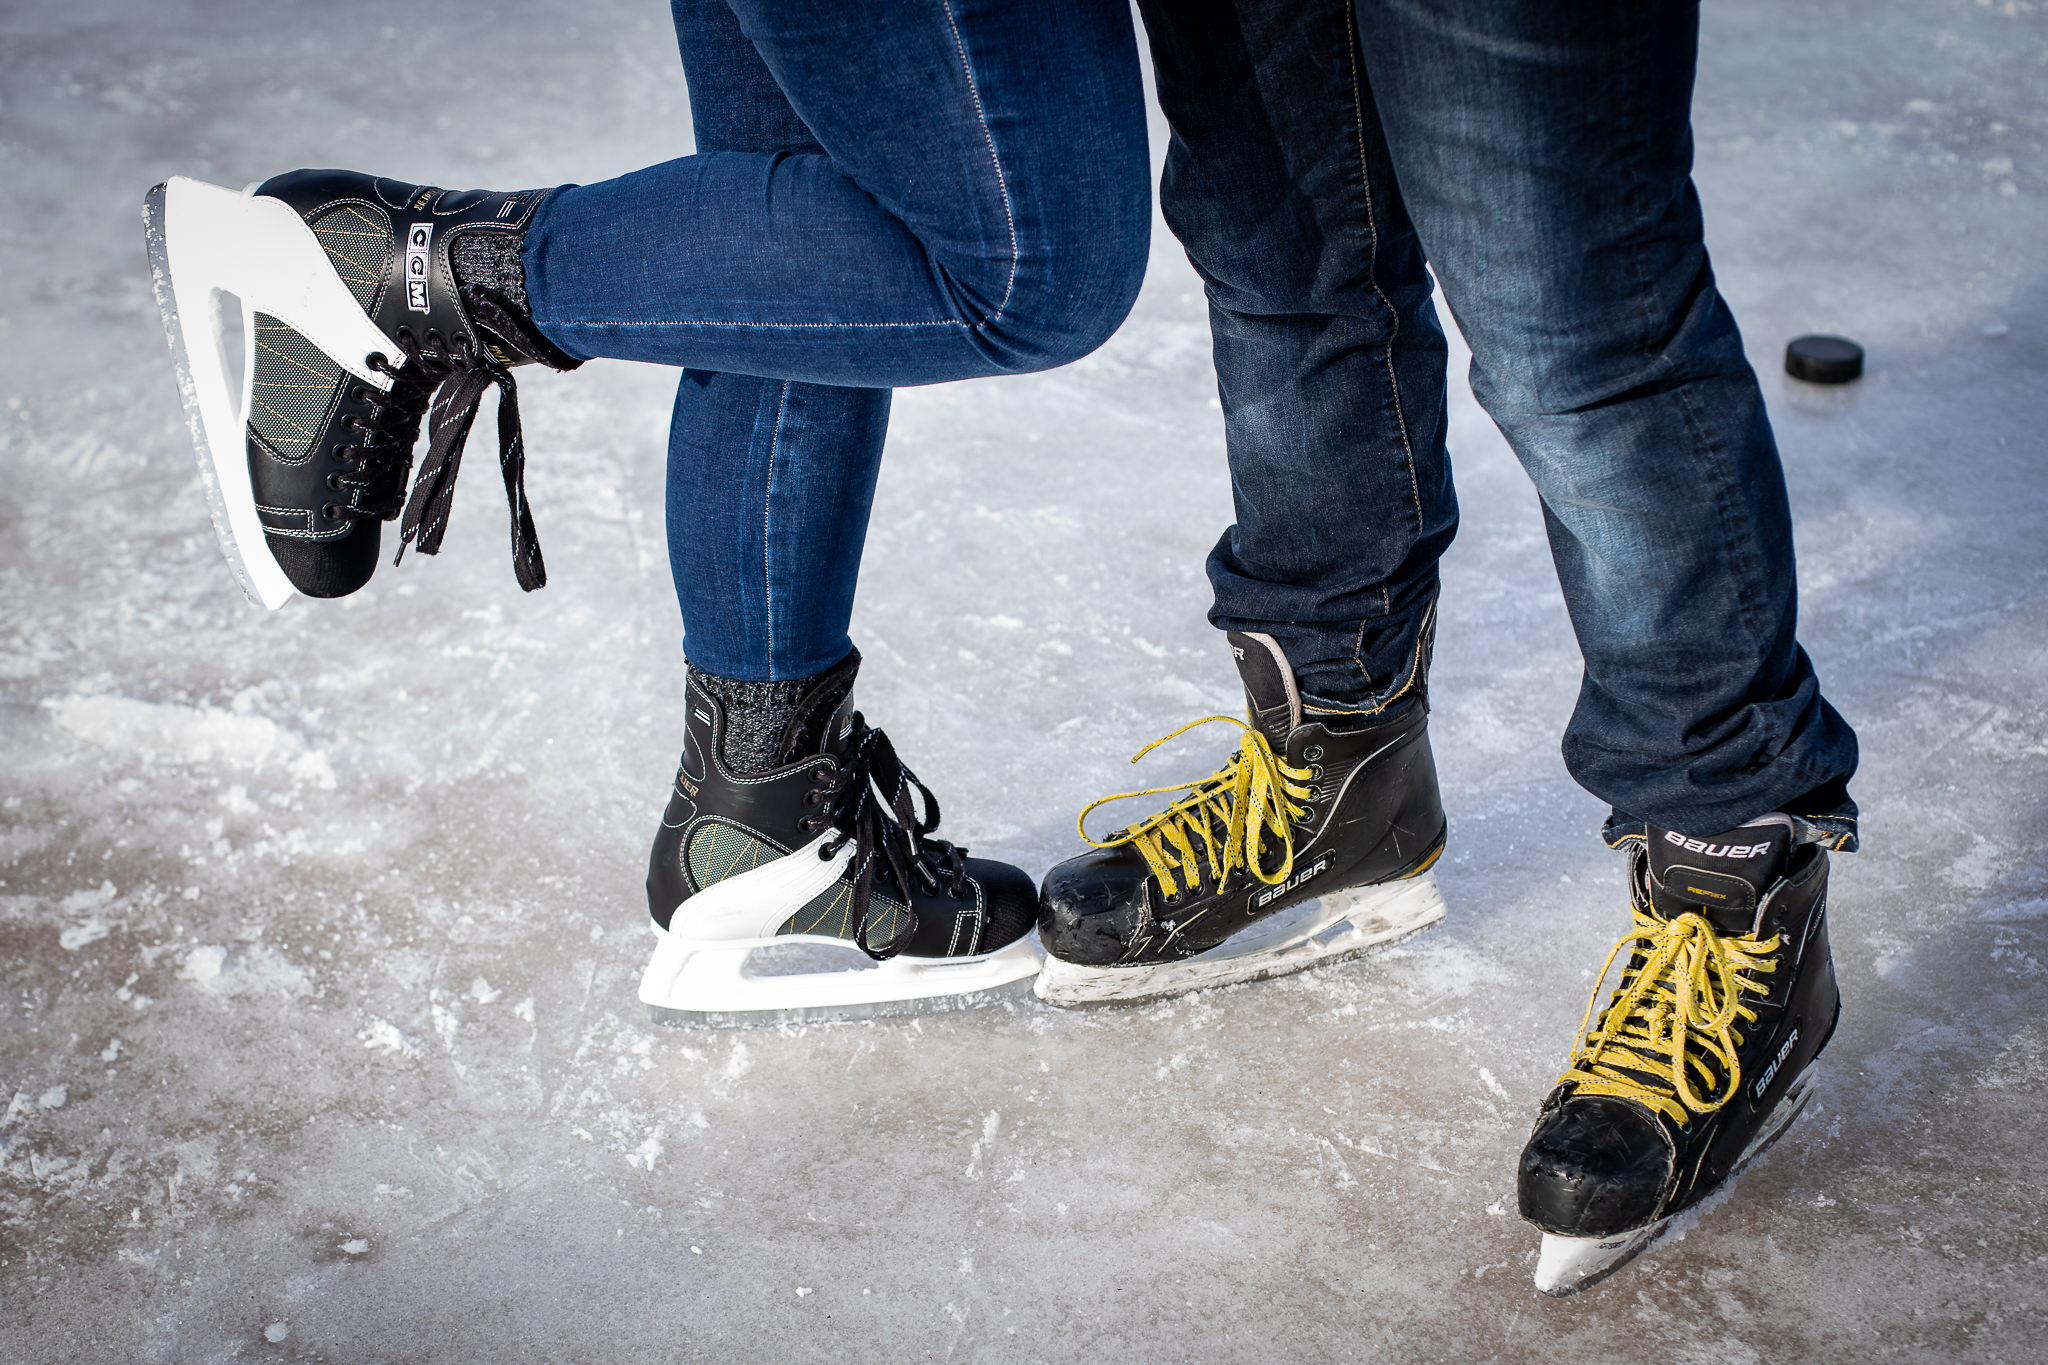 ice-skating-hockey-engagement-photos-9.jpg